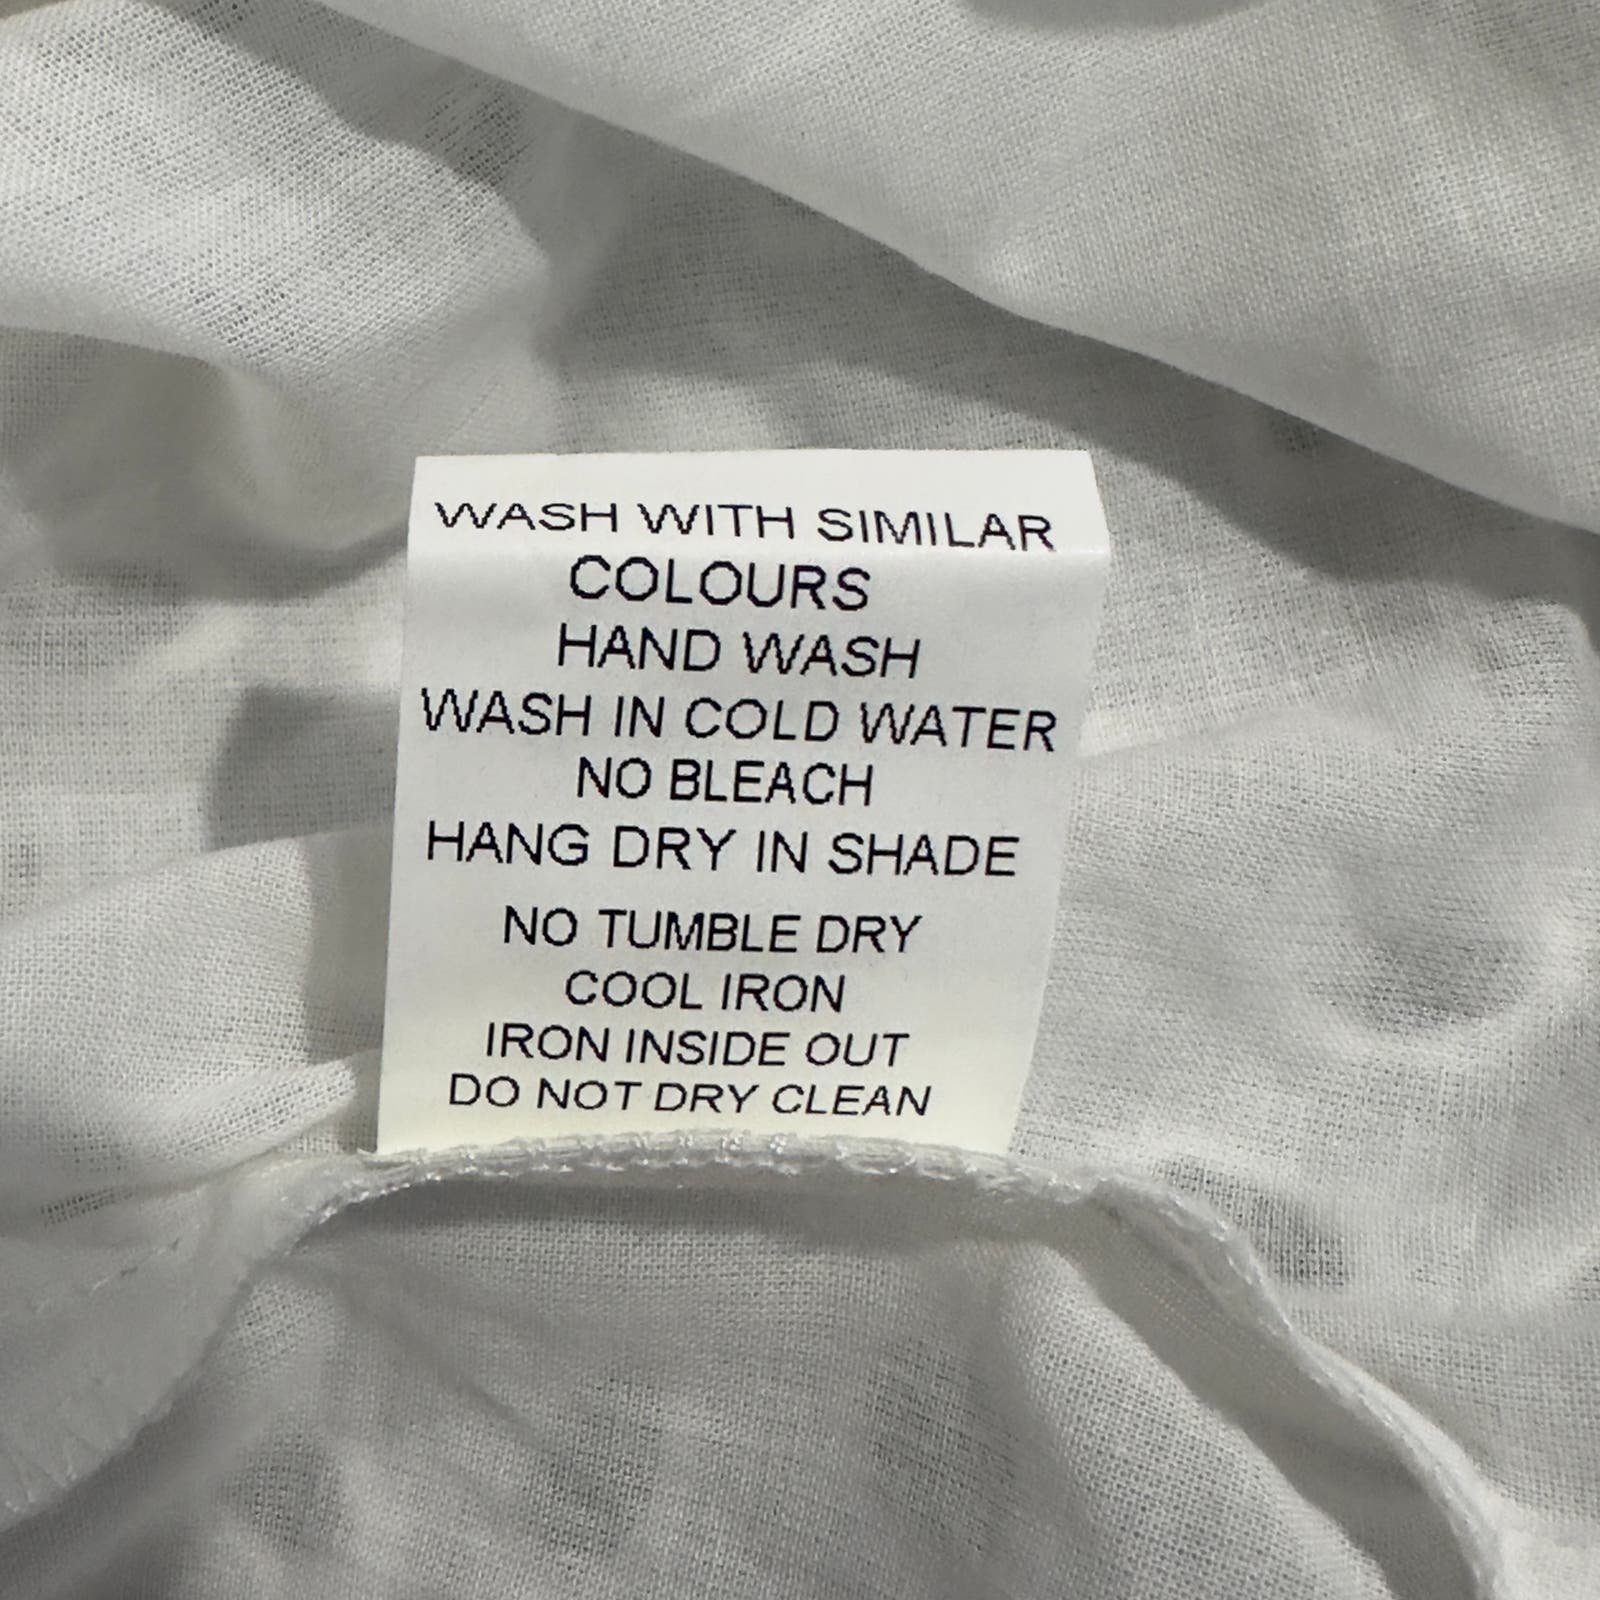 Stylish Mon Renn White Tiered Eyelet Maxi Skirt Women´s Size 4 NWT JOV81MC5N Online Shop